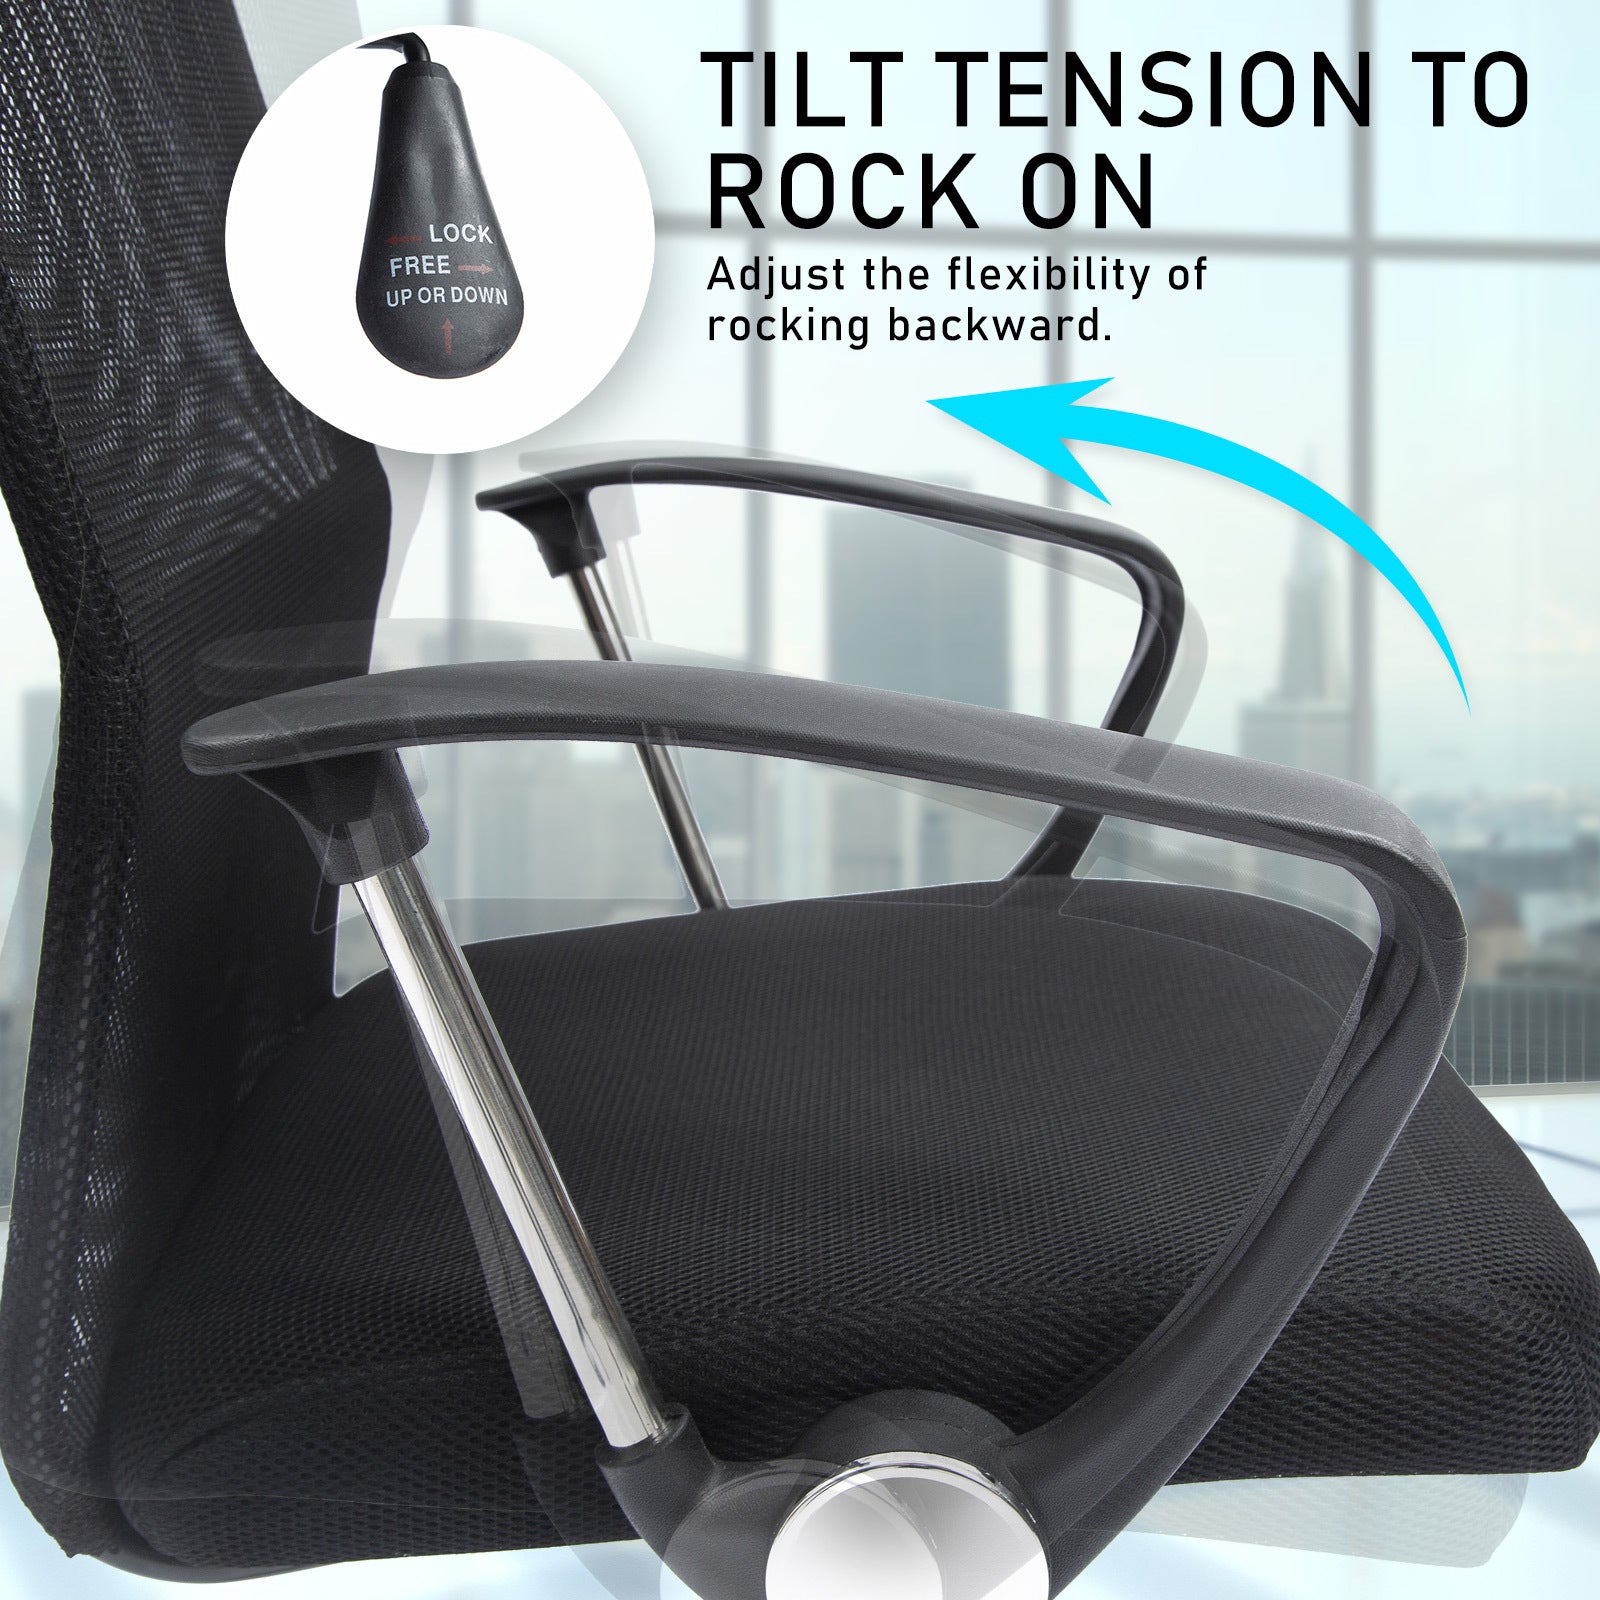 La Bella Black Office Chair Breeze Mesh High Back Tilt In-Built Lumbar